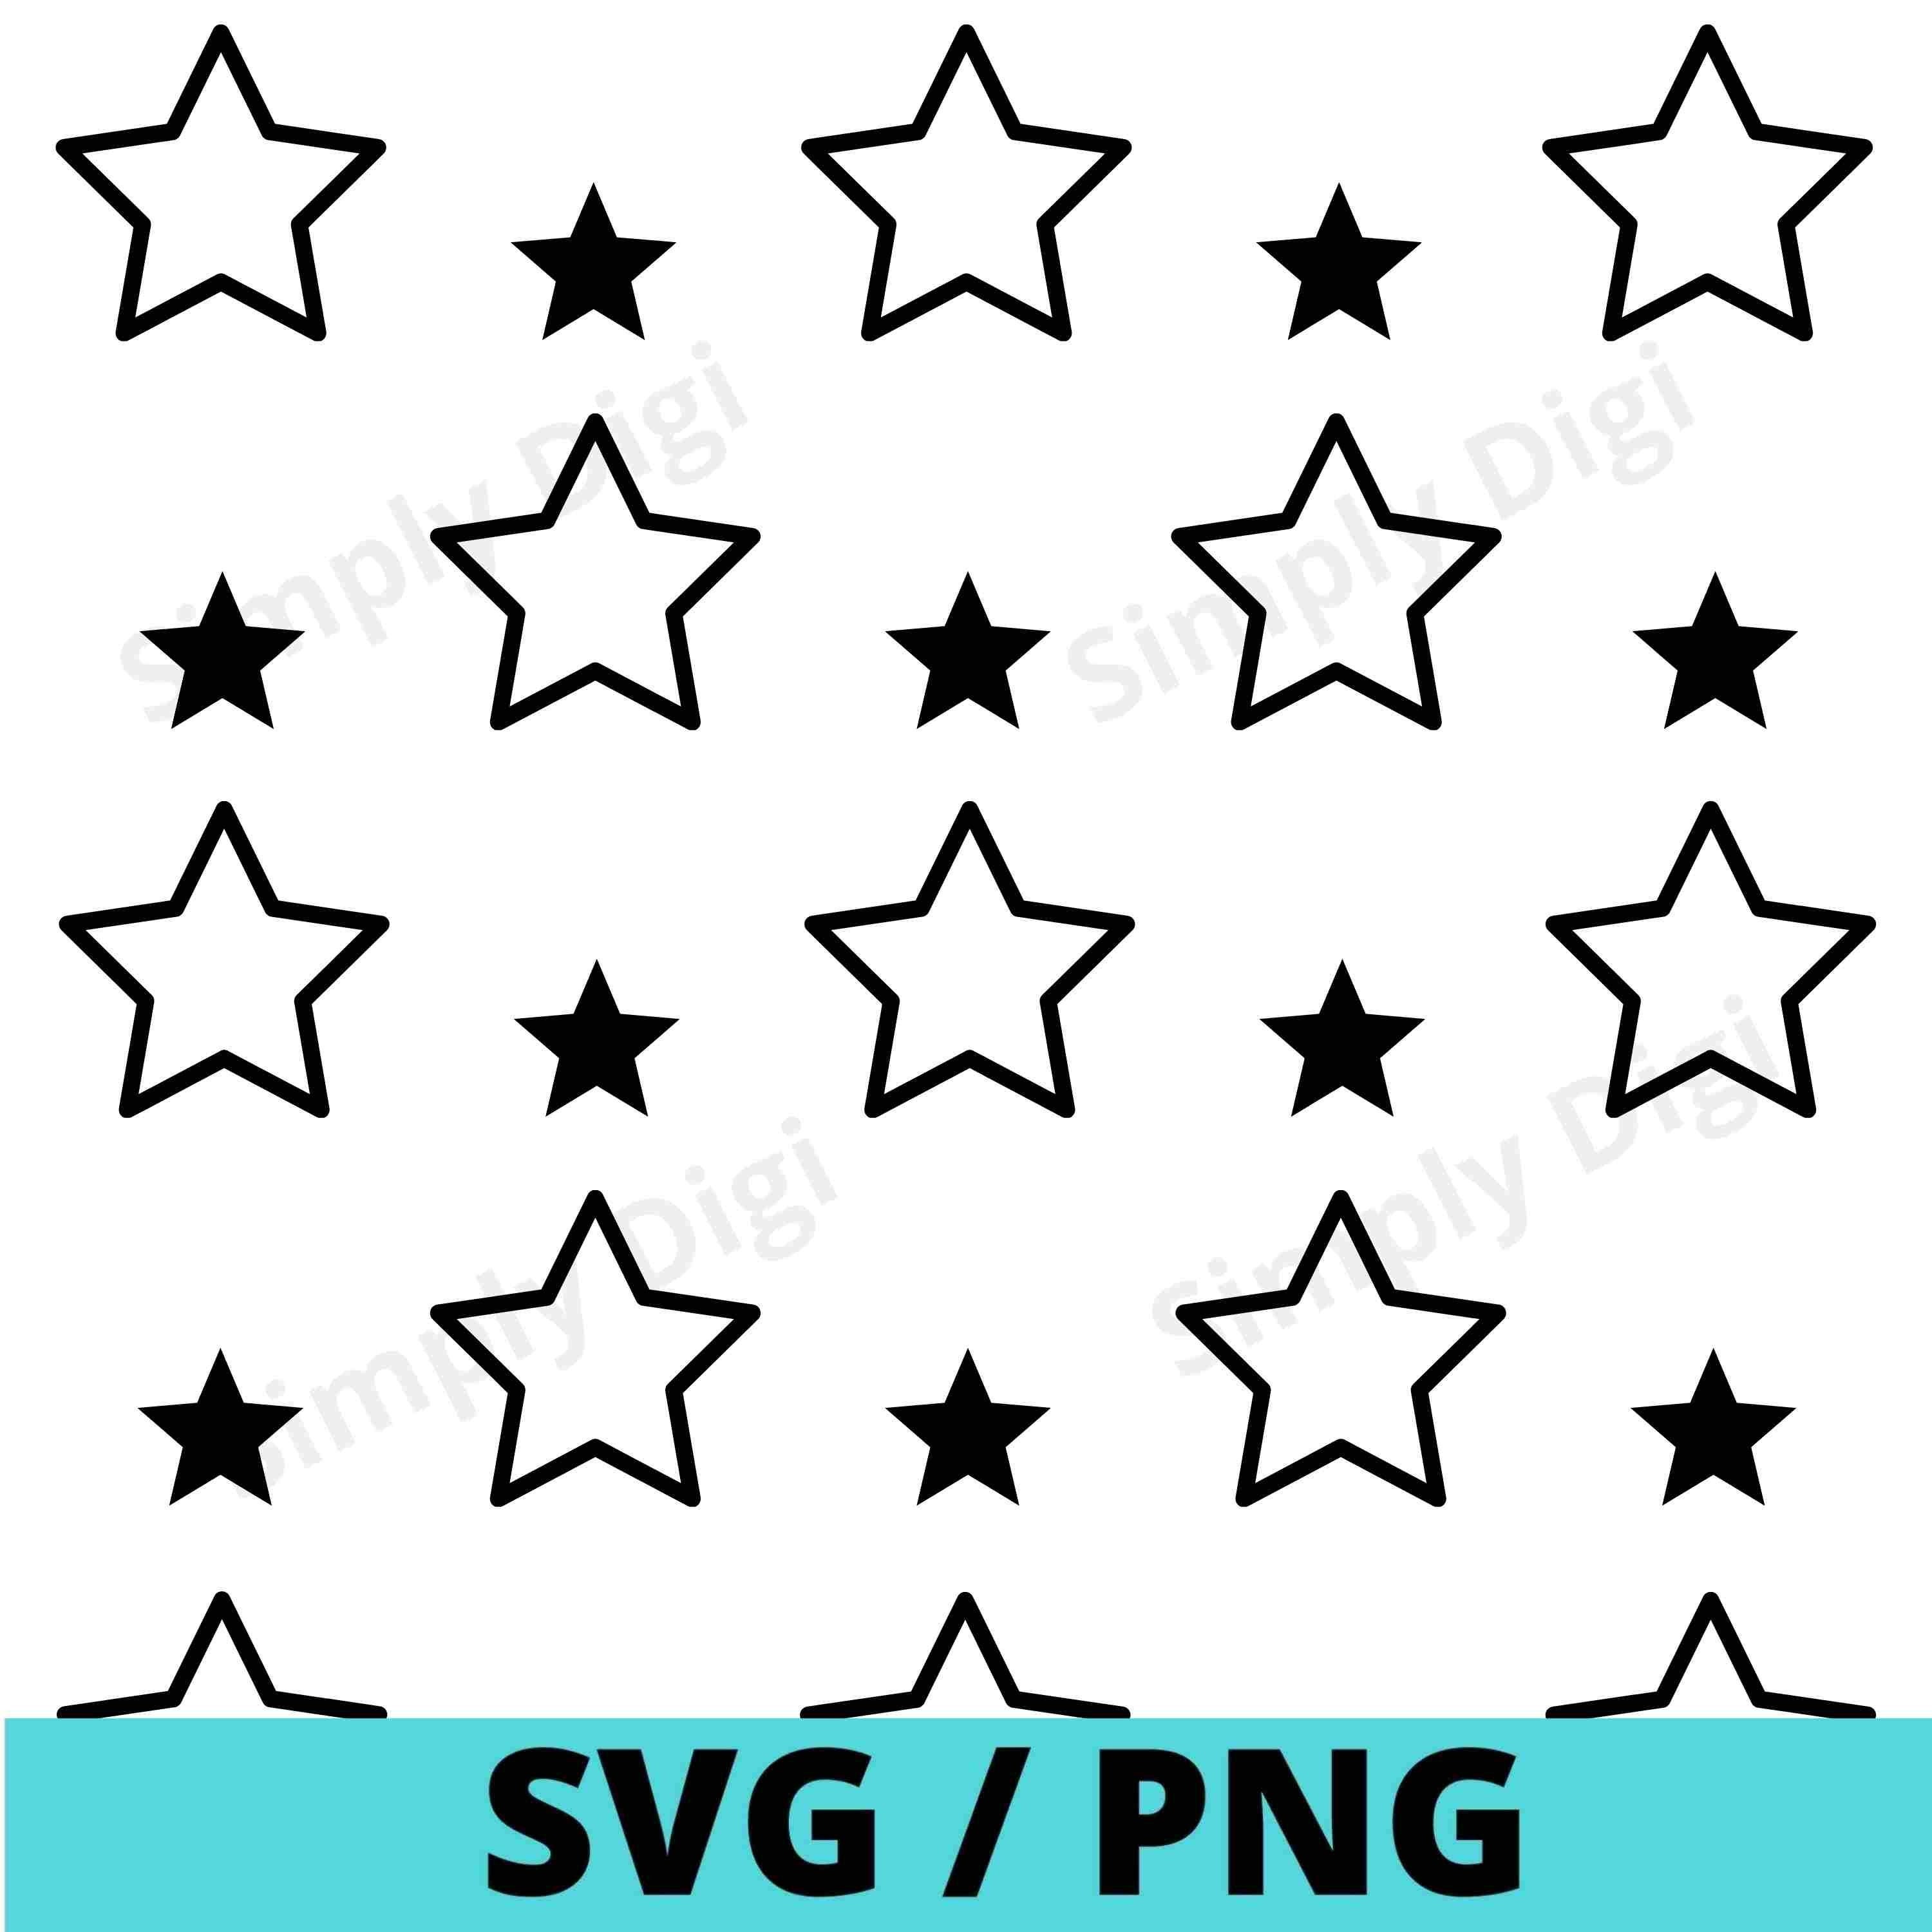 Tiny Stars Vector Patterns. Irregular Hand Drawn Simple Starry Sky